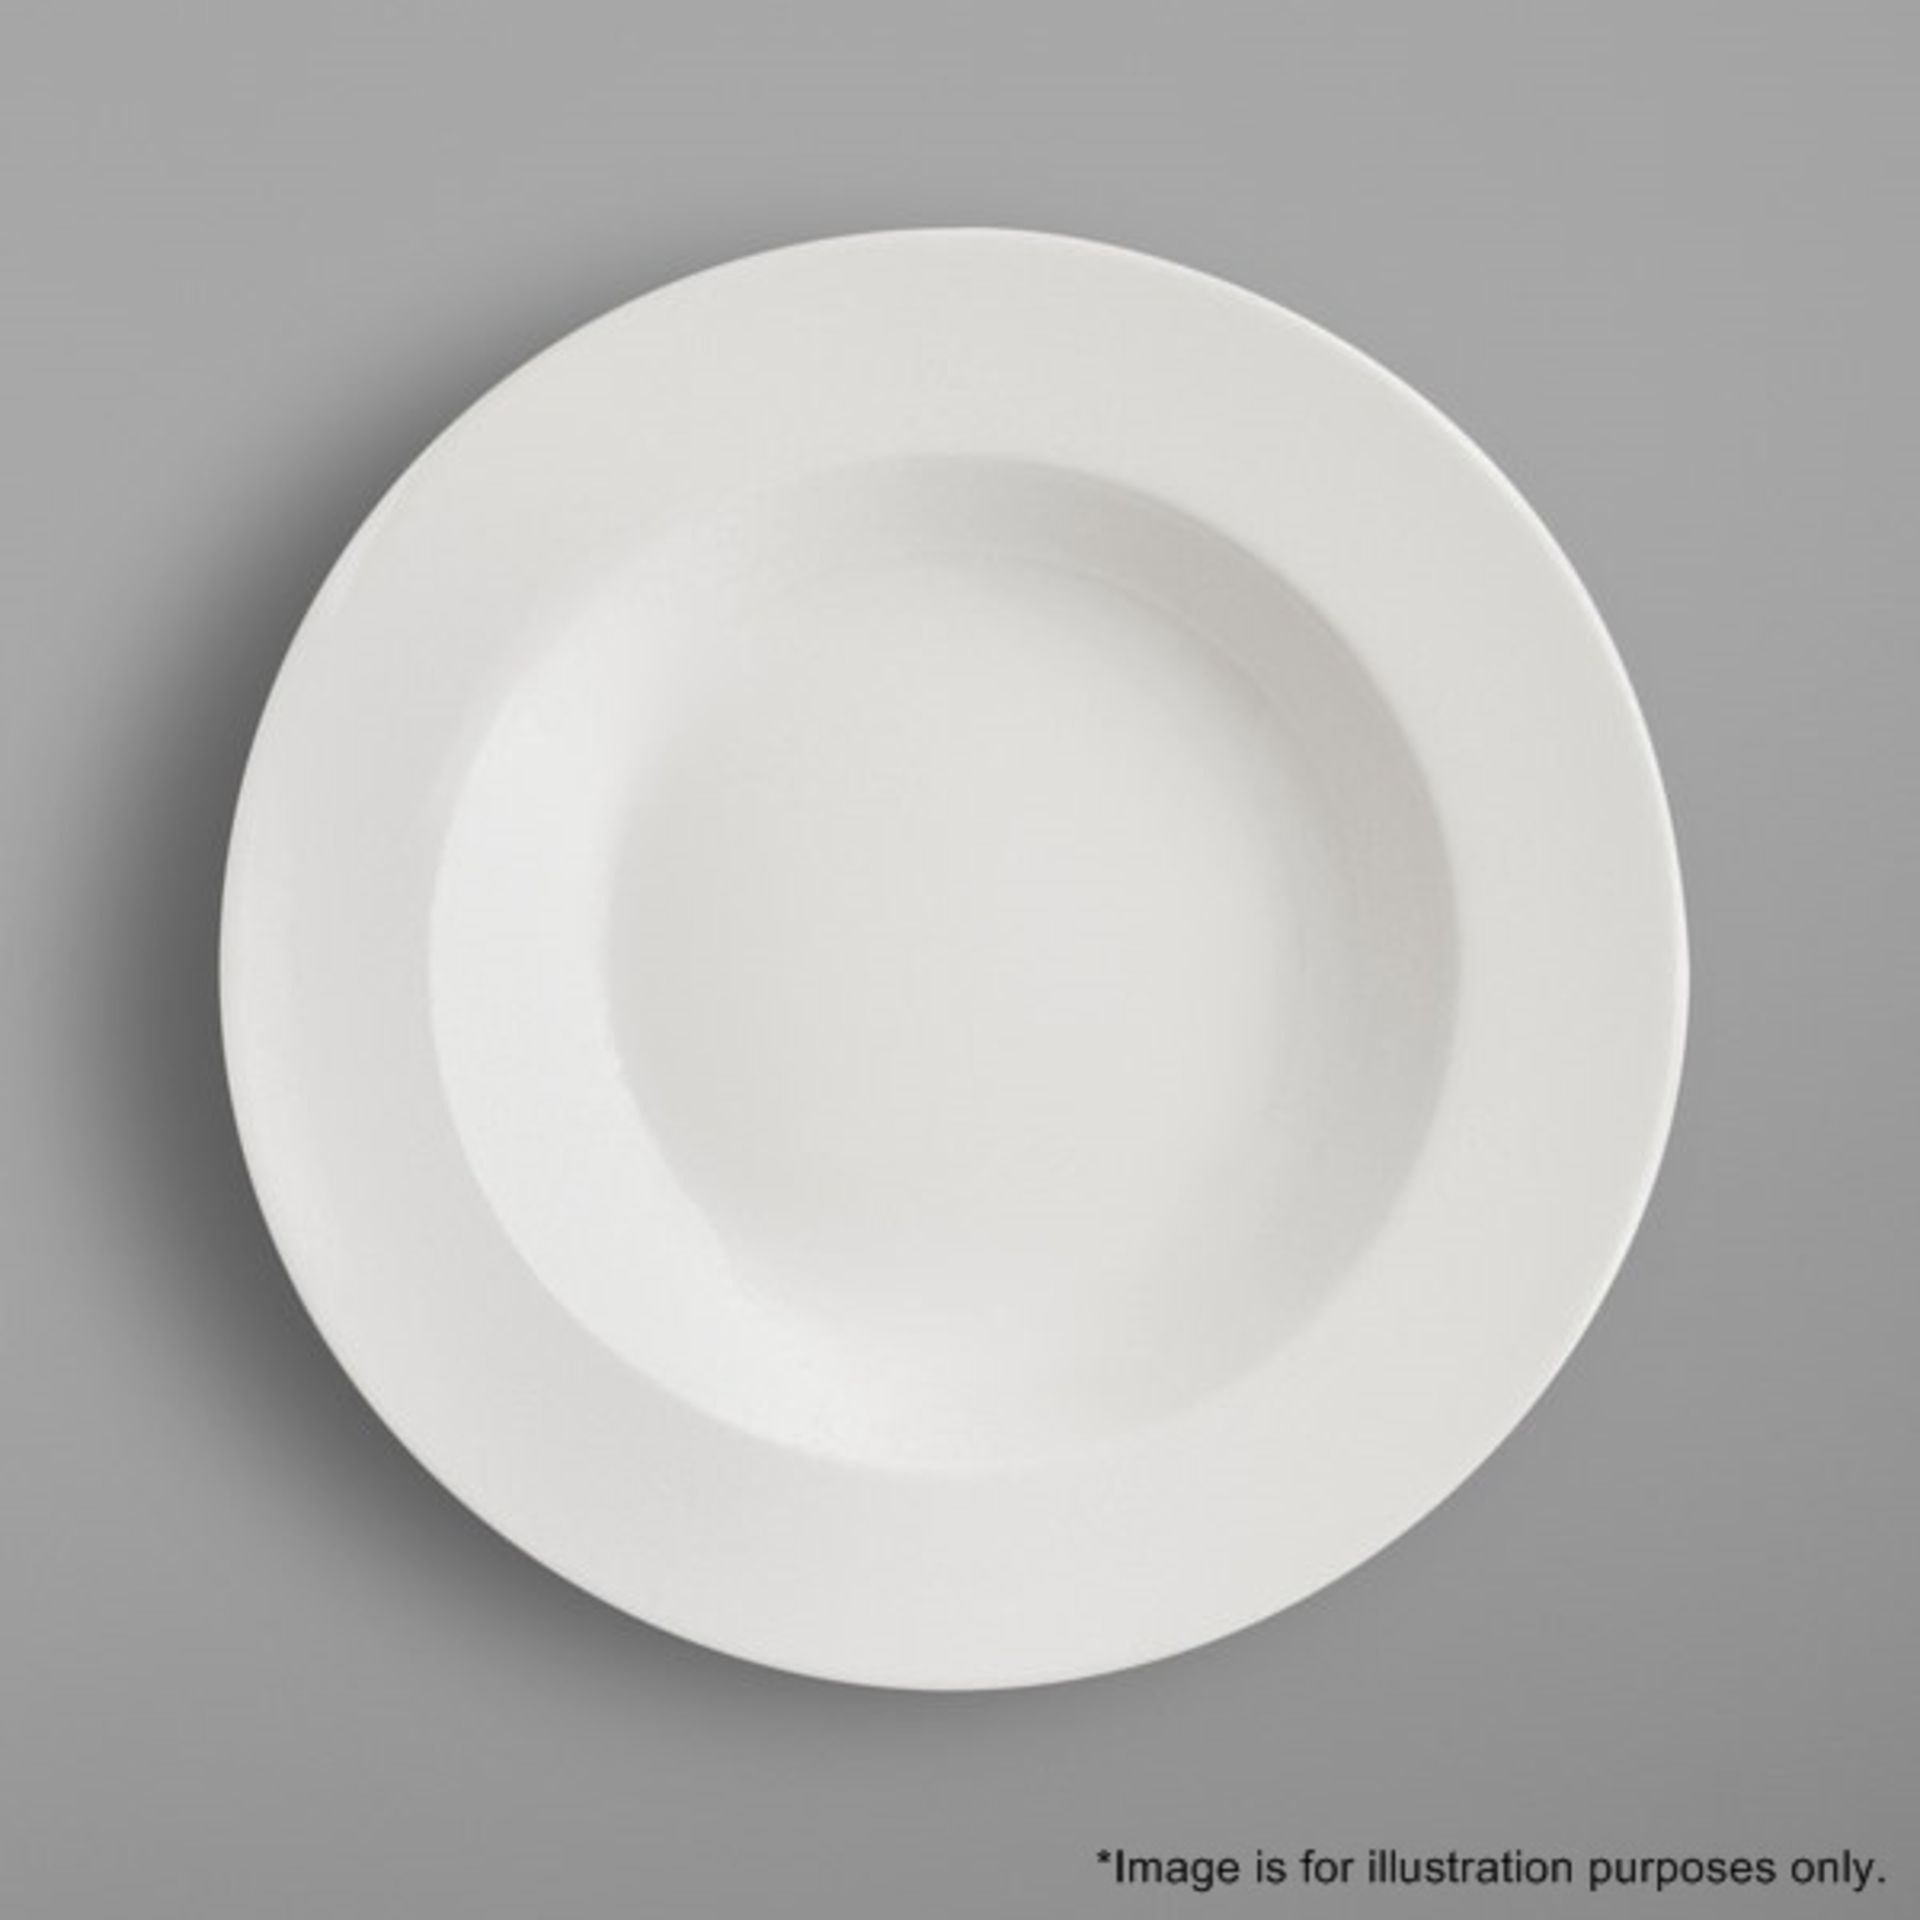 12 x RAK Porcelain Banquet 30cm Ivory Porcelain Deep Plates - Original Price £130.00 - Image 2 of 5